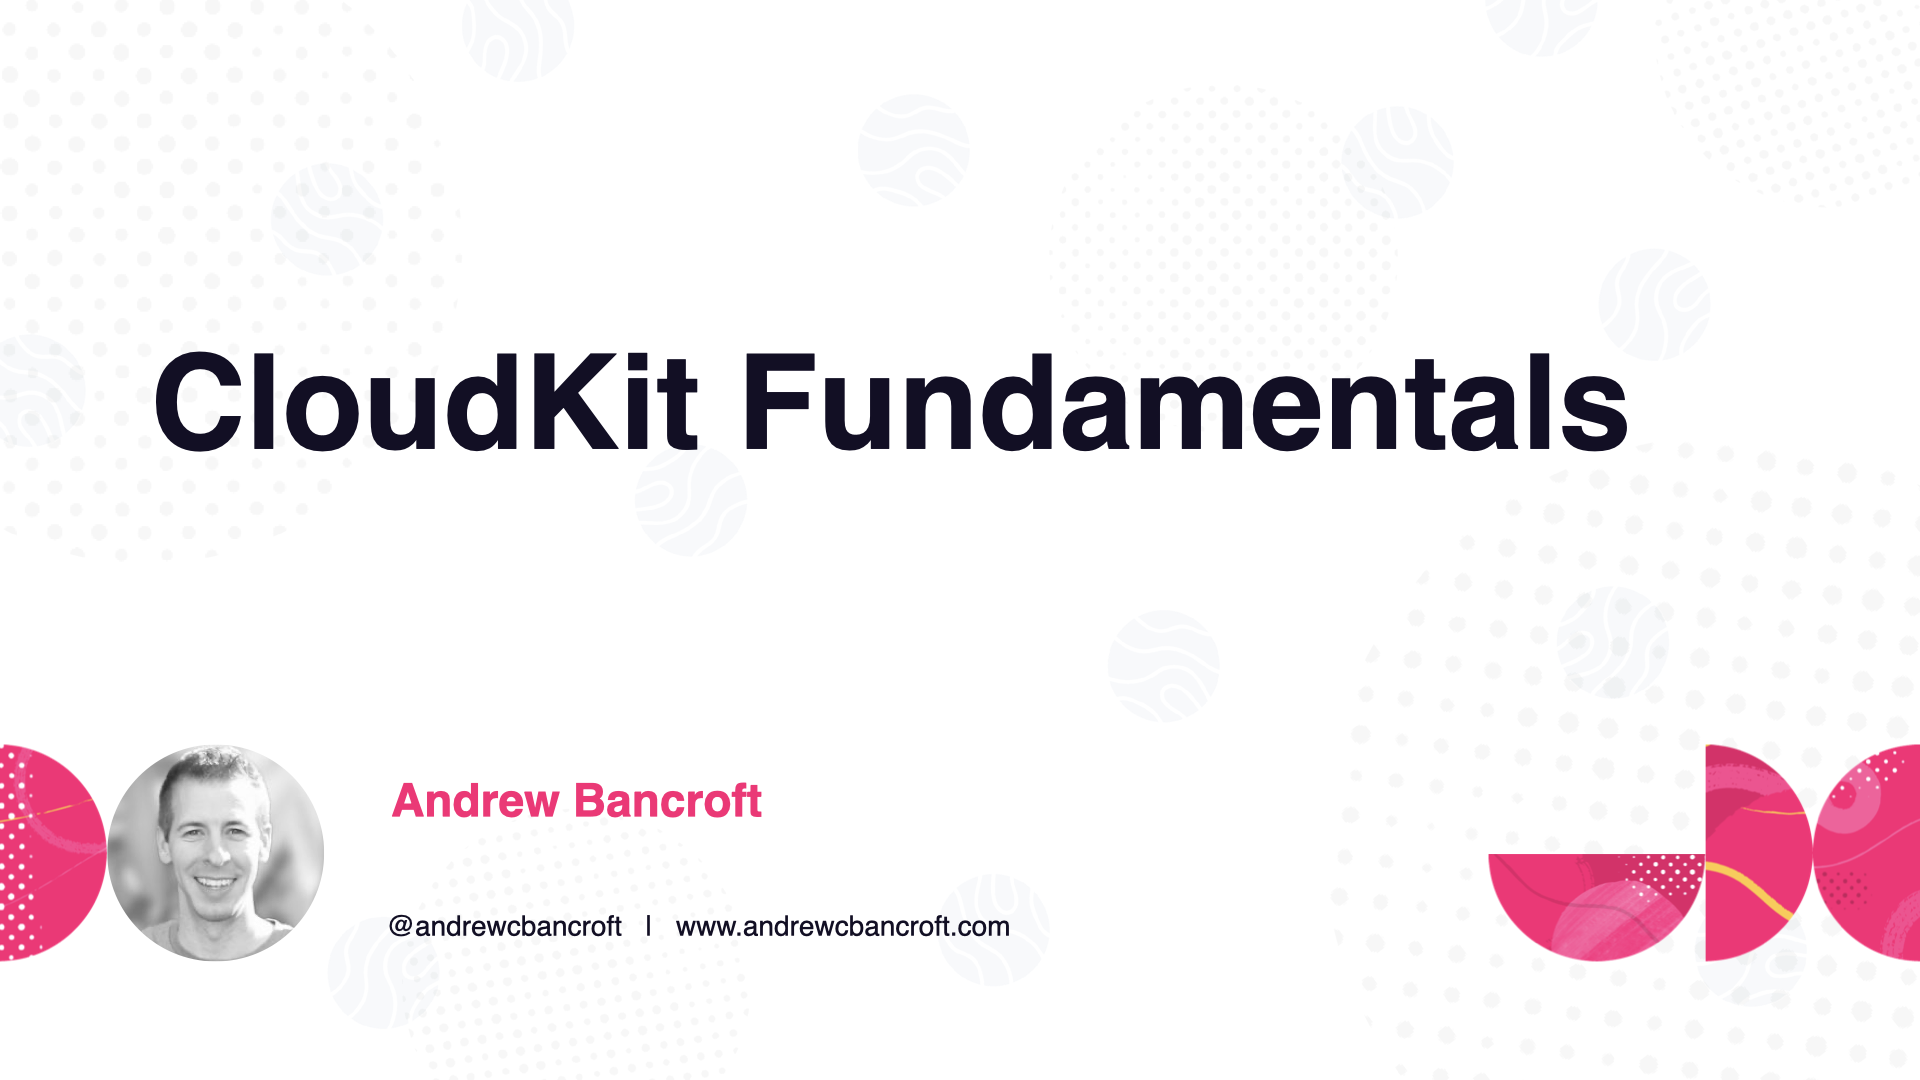 CloudKit Fundamentals